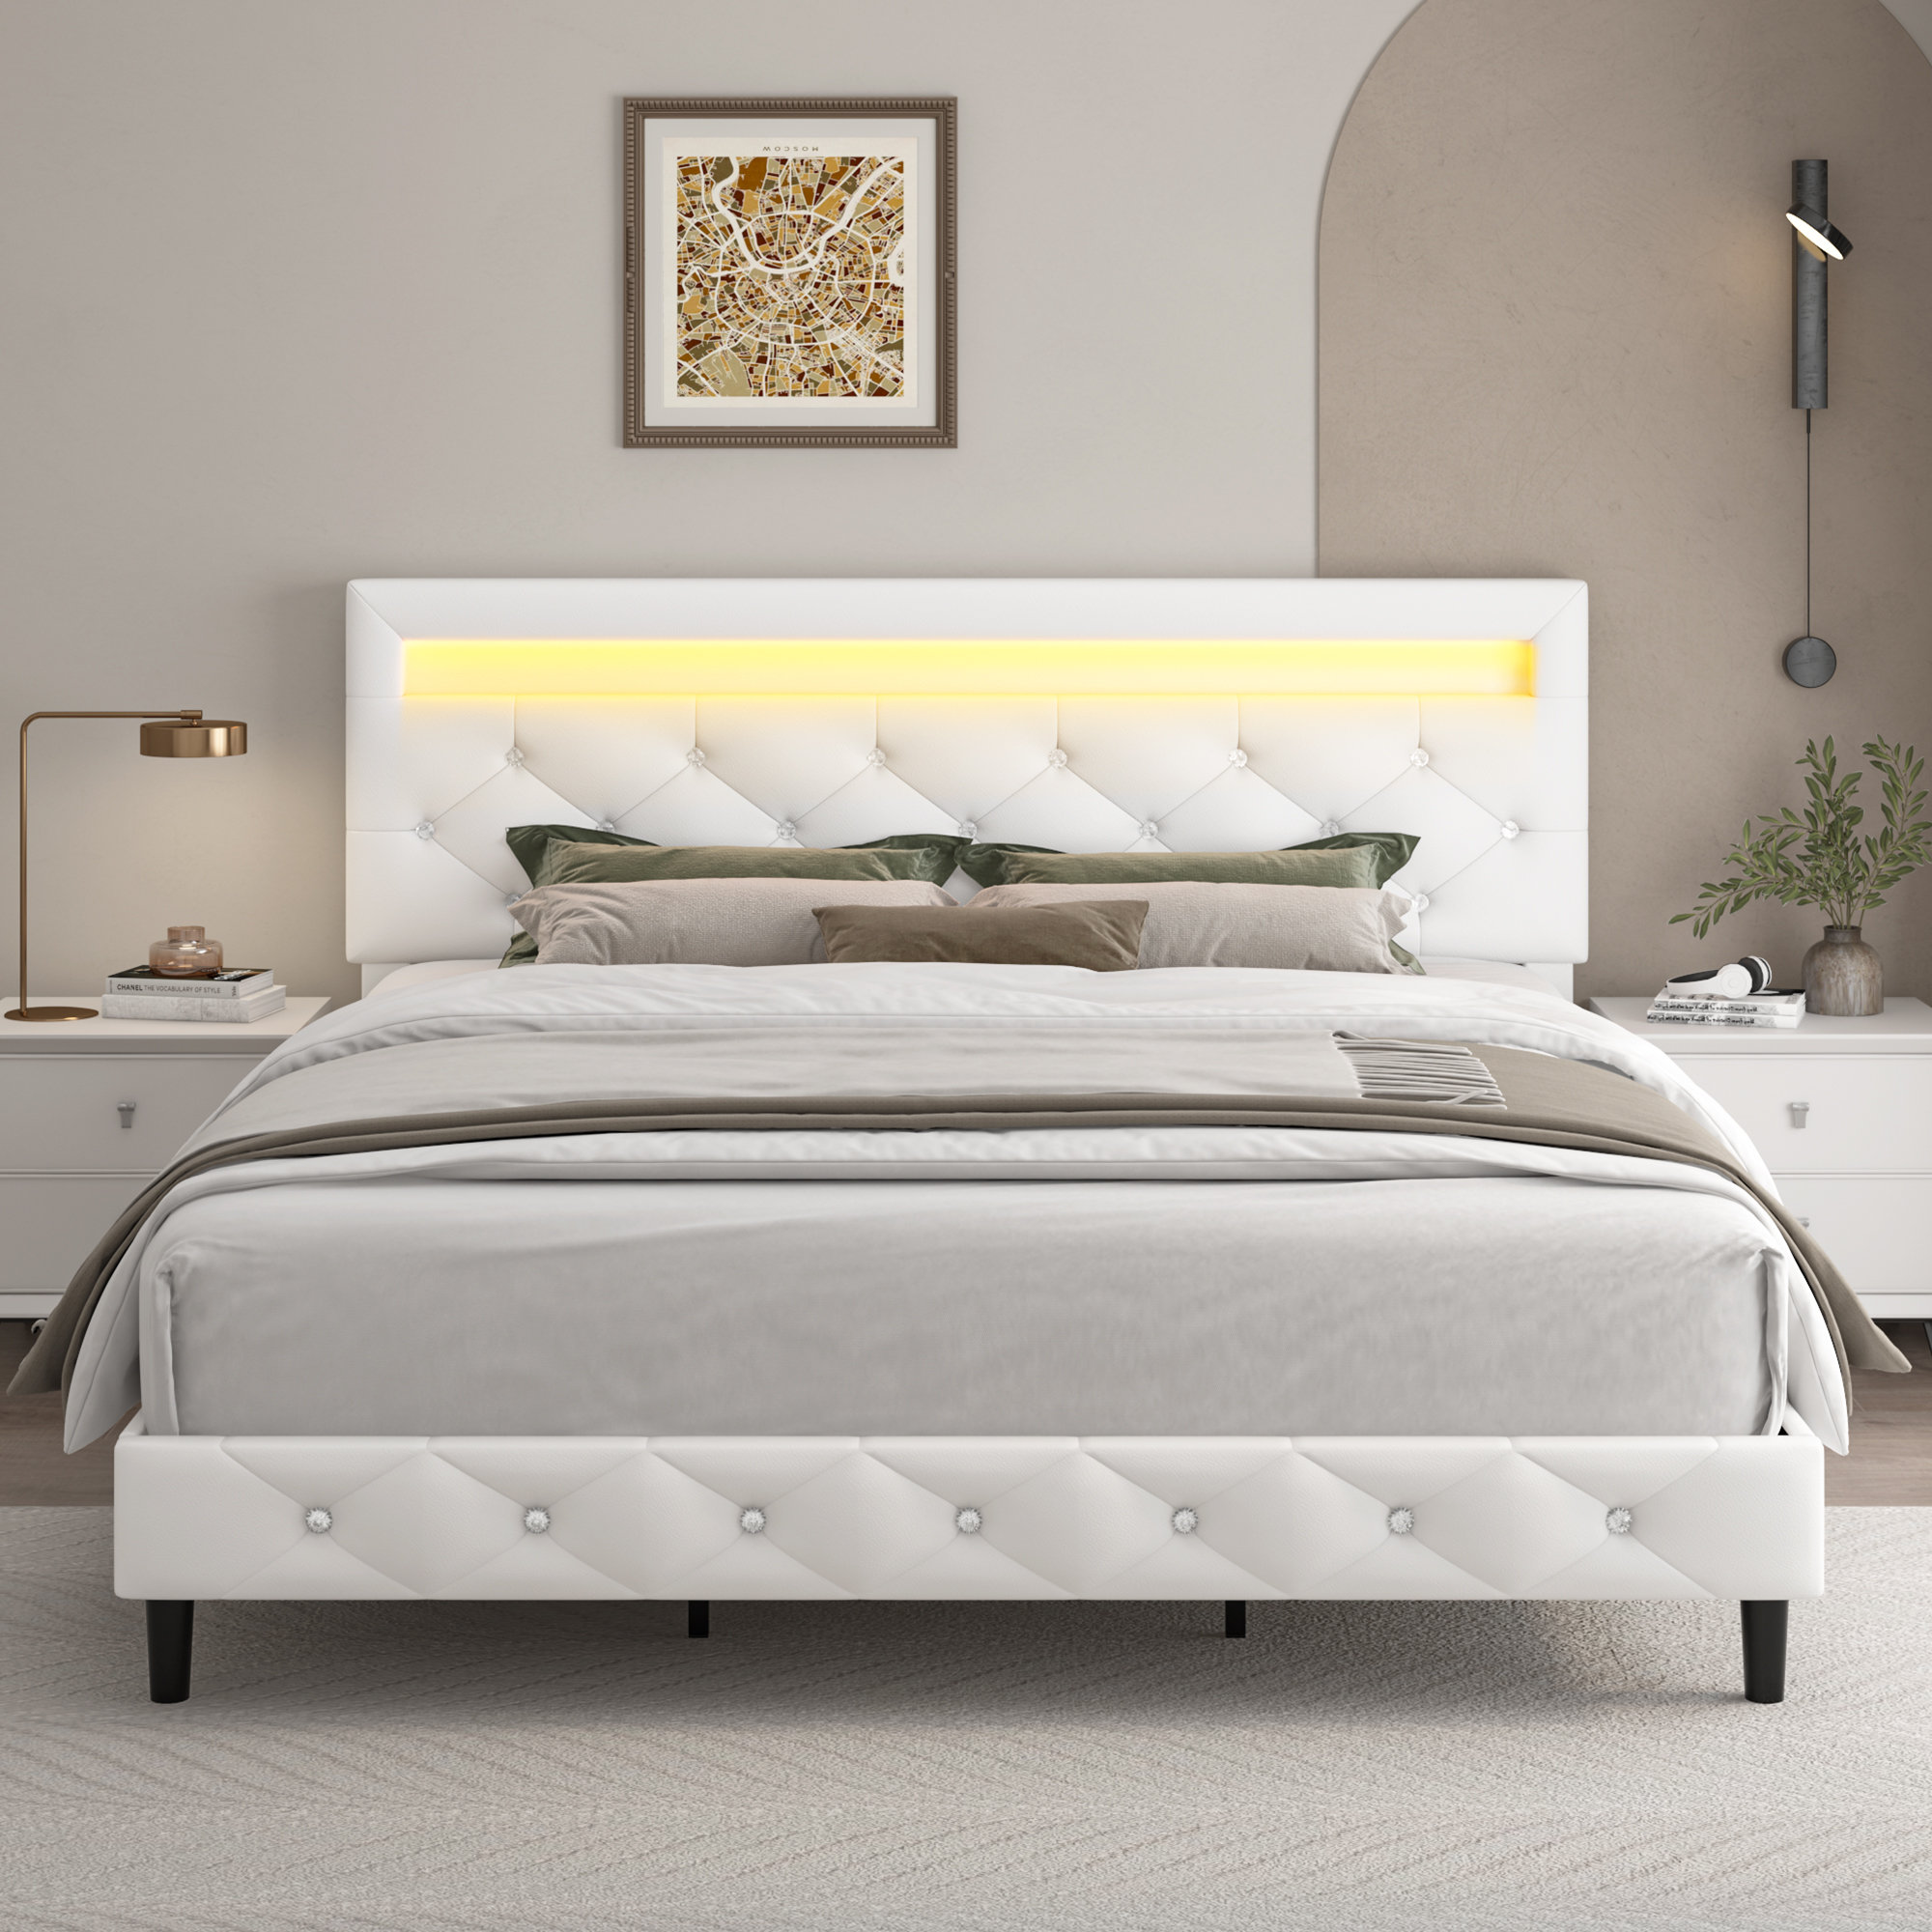 Alanta Tufted Upholstered Platform Bed with LED and Crystal Wade Logan Color: White, Size: King